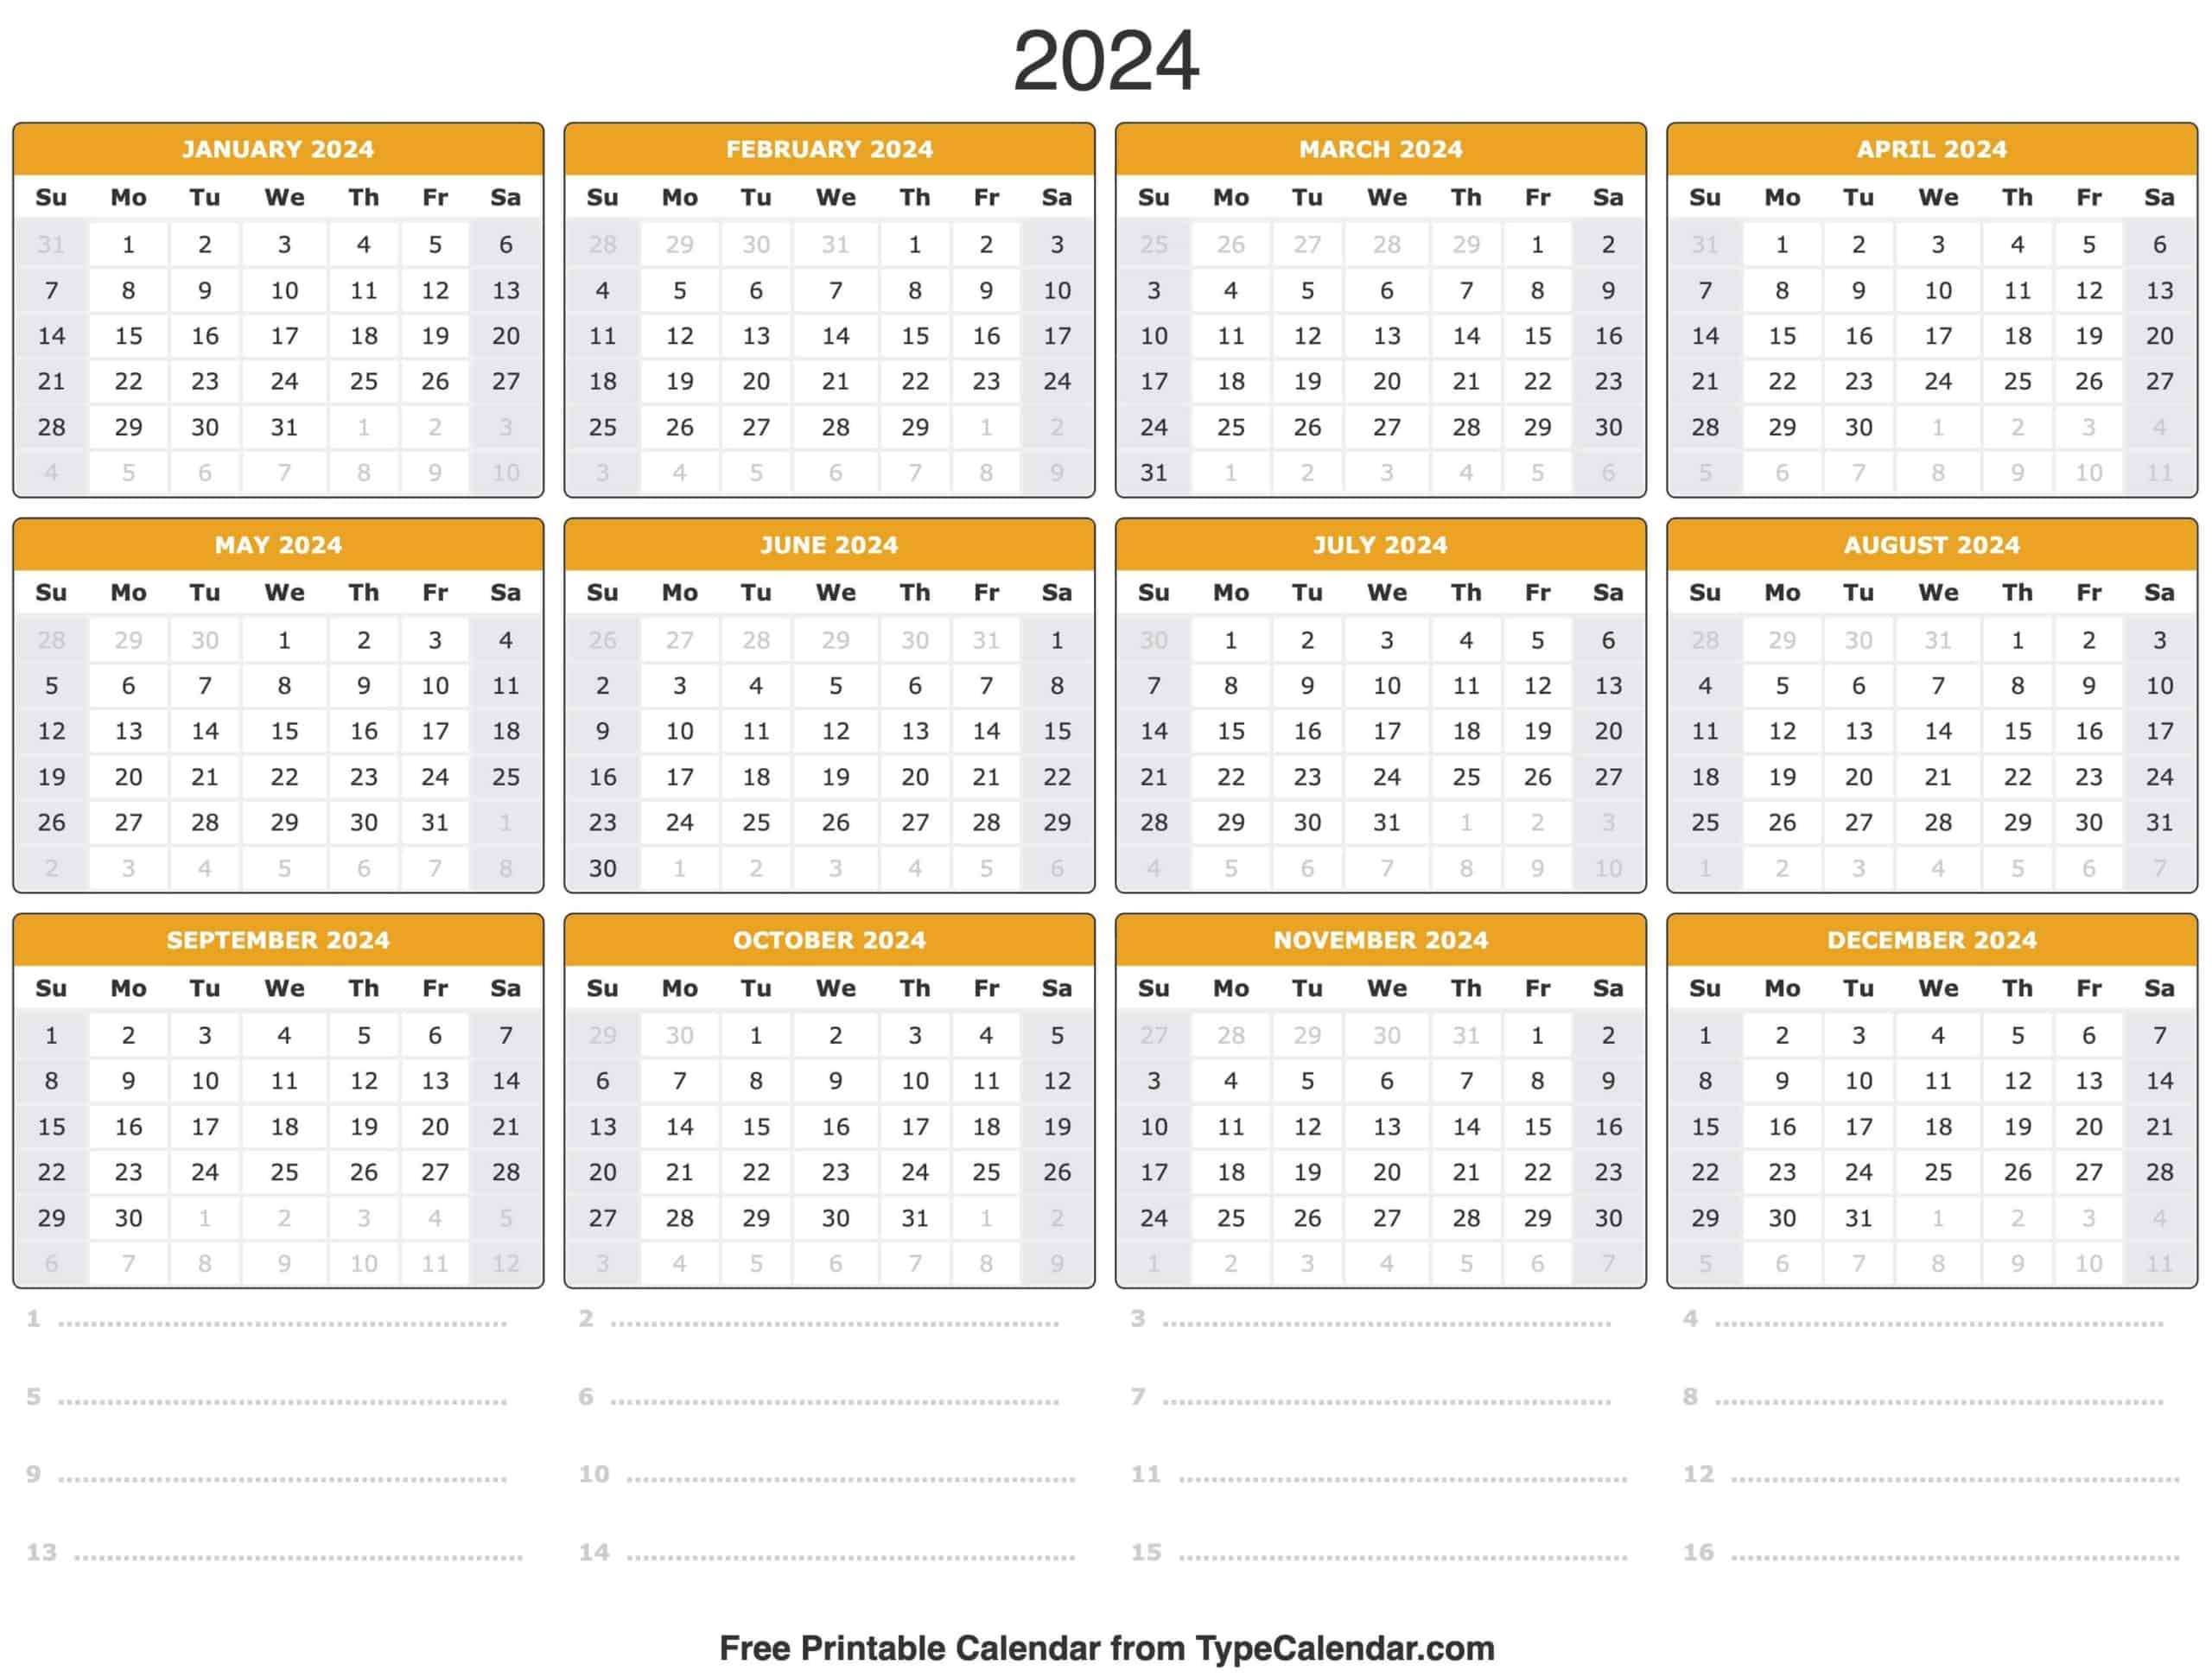 2024 Calendar: Free Printable Calendar With Holidays